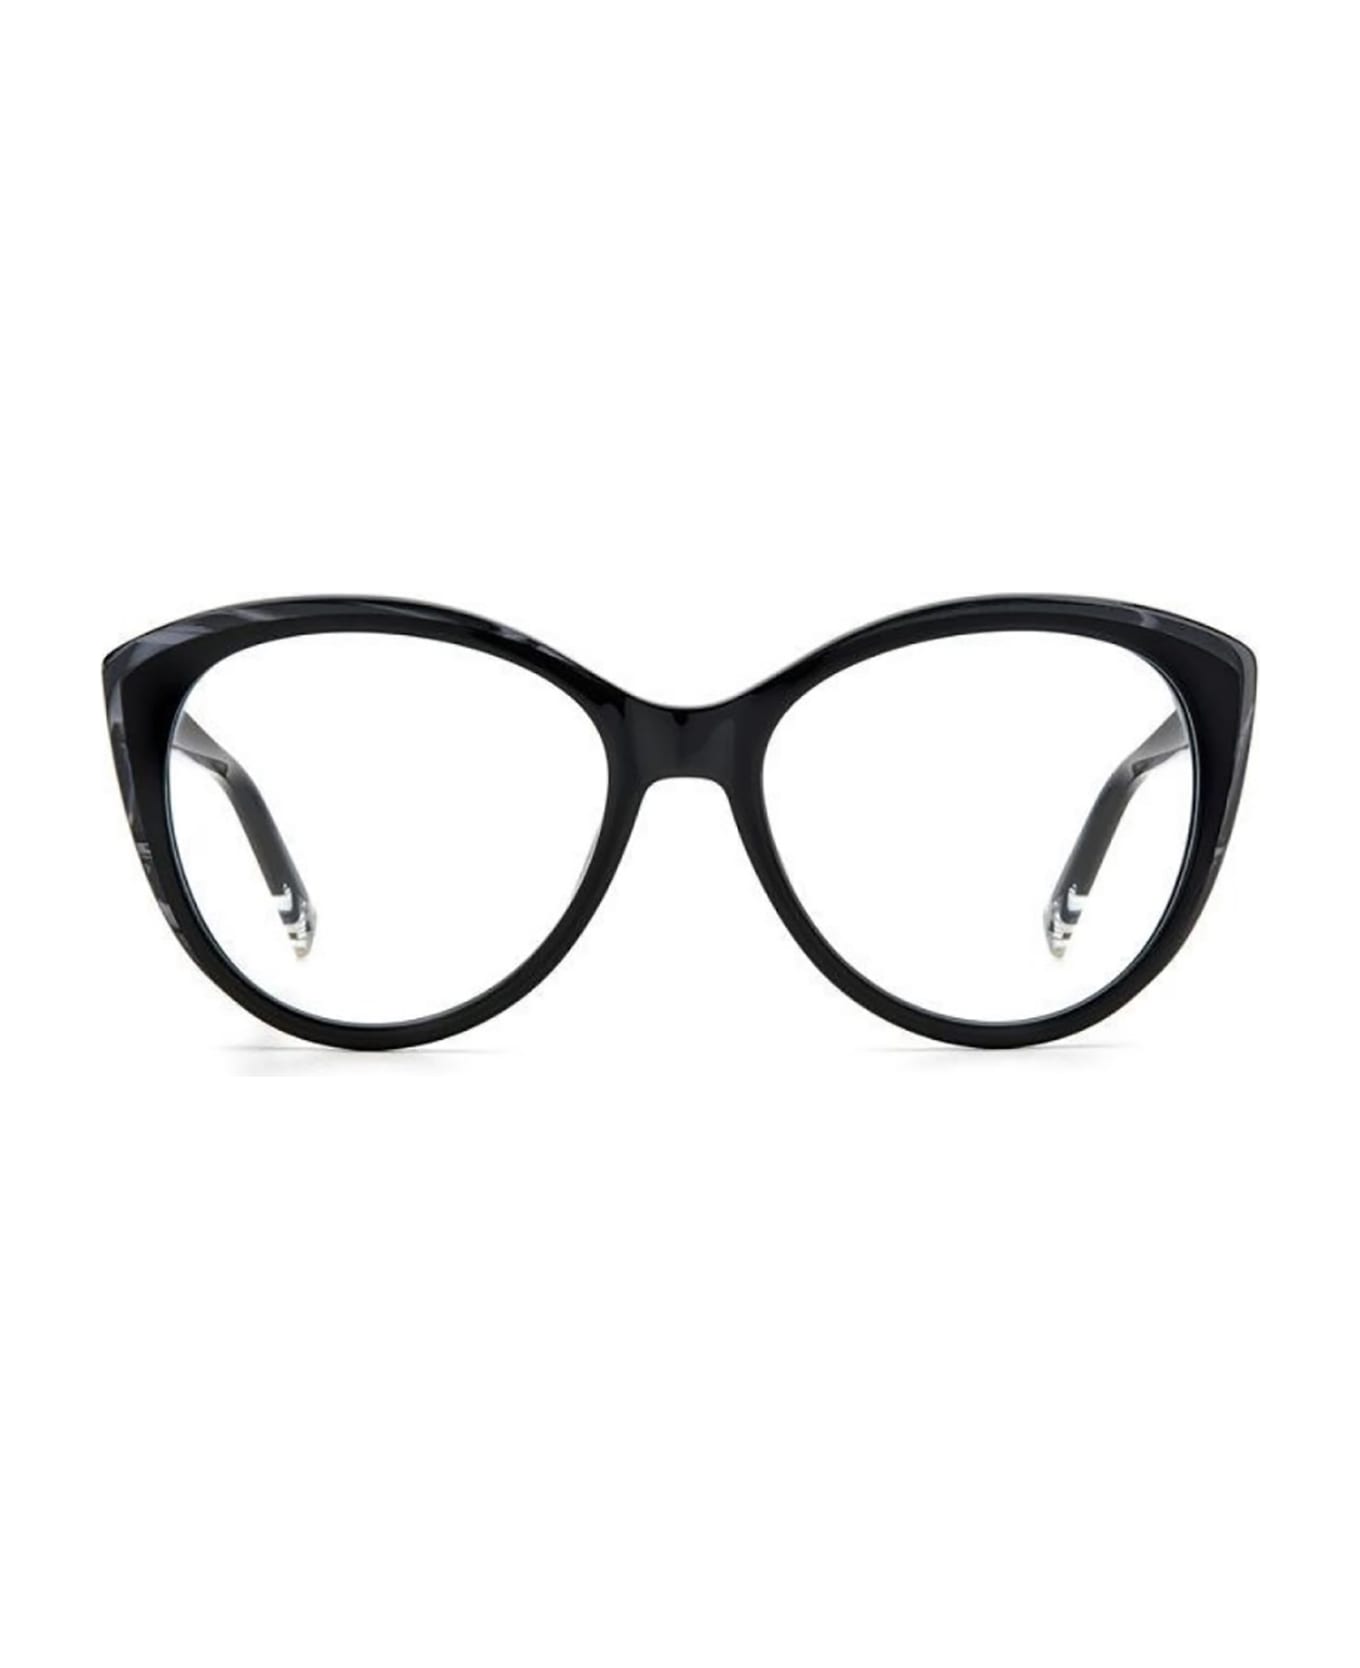 Missoni MIS 0094 Eyewear - Grey Blk Hor